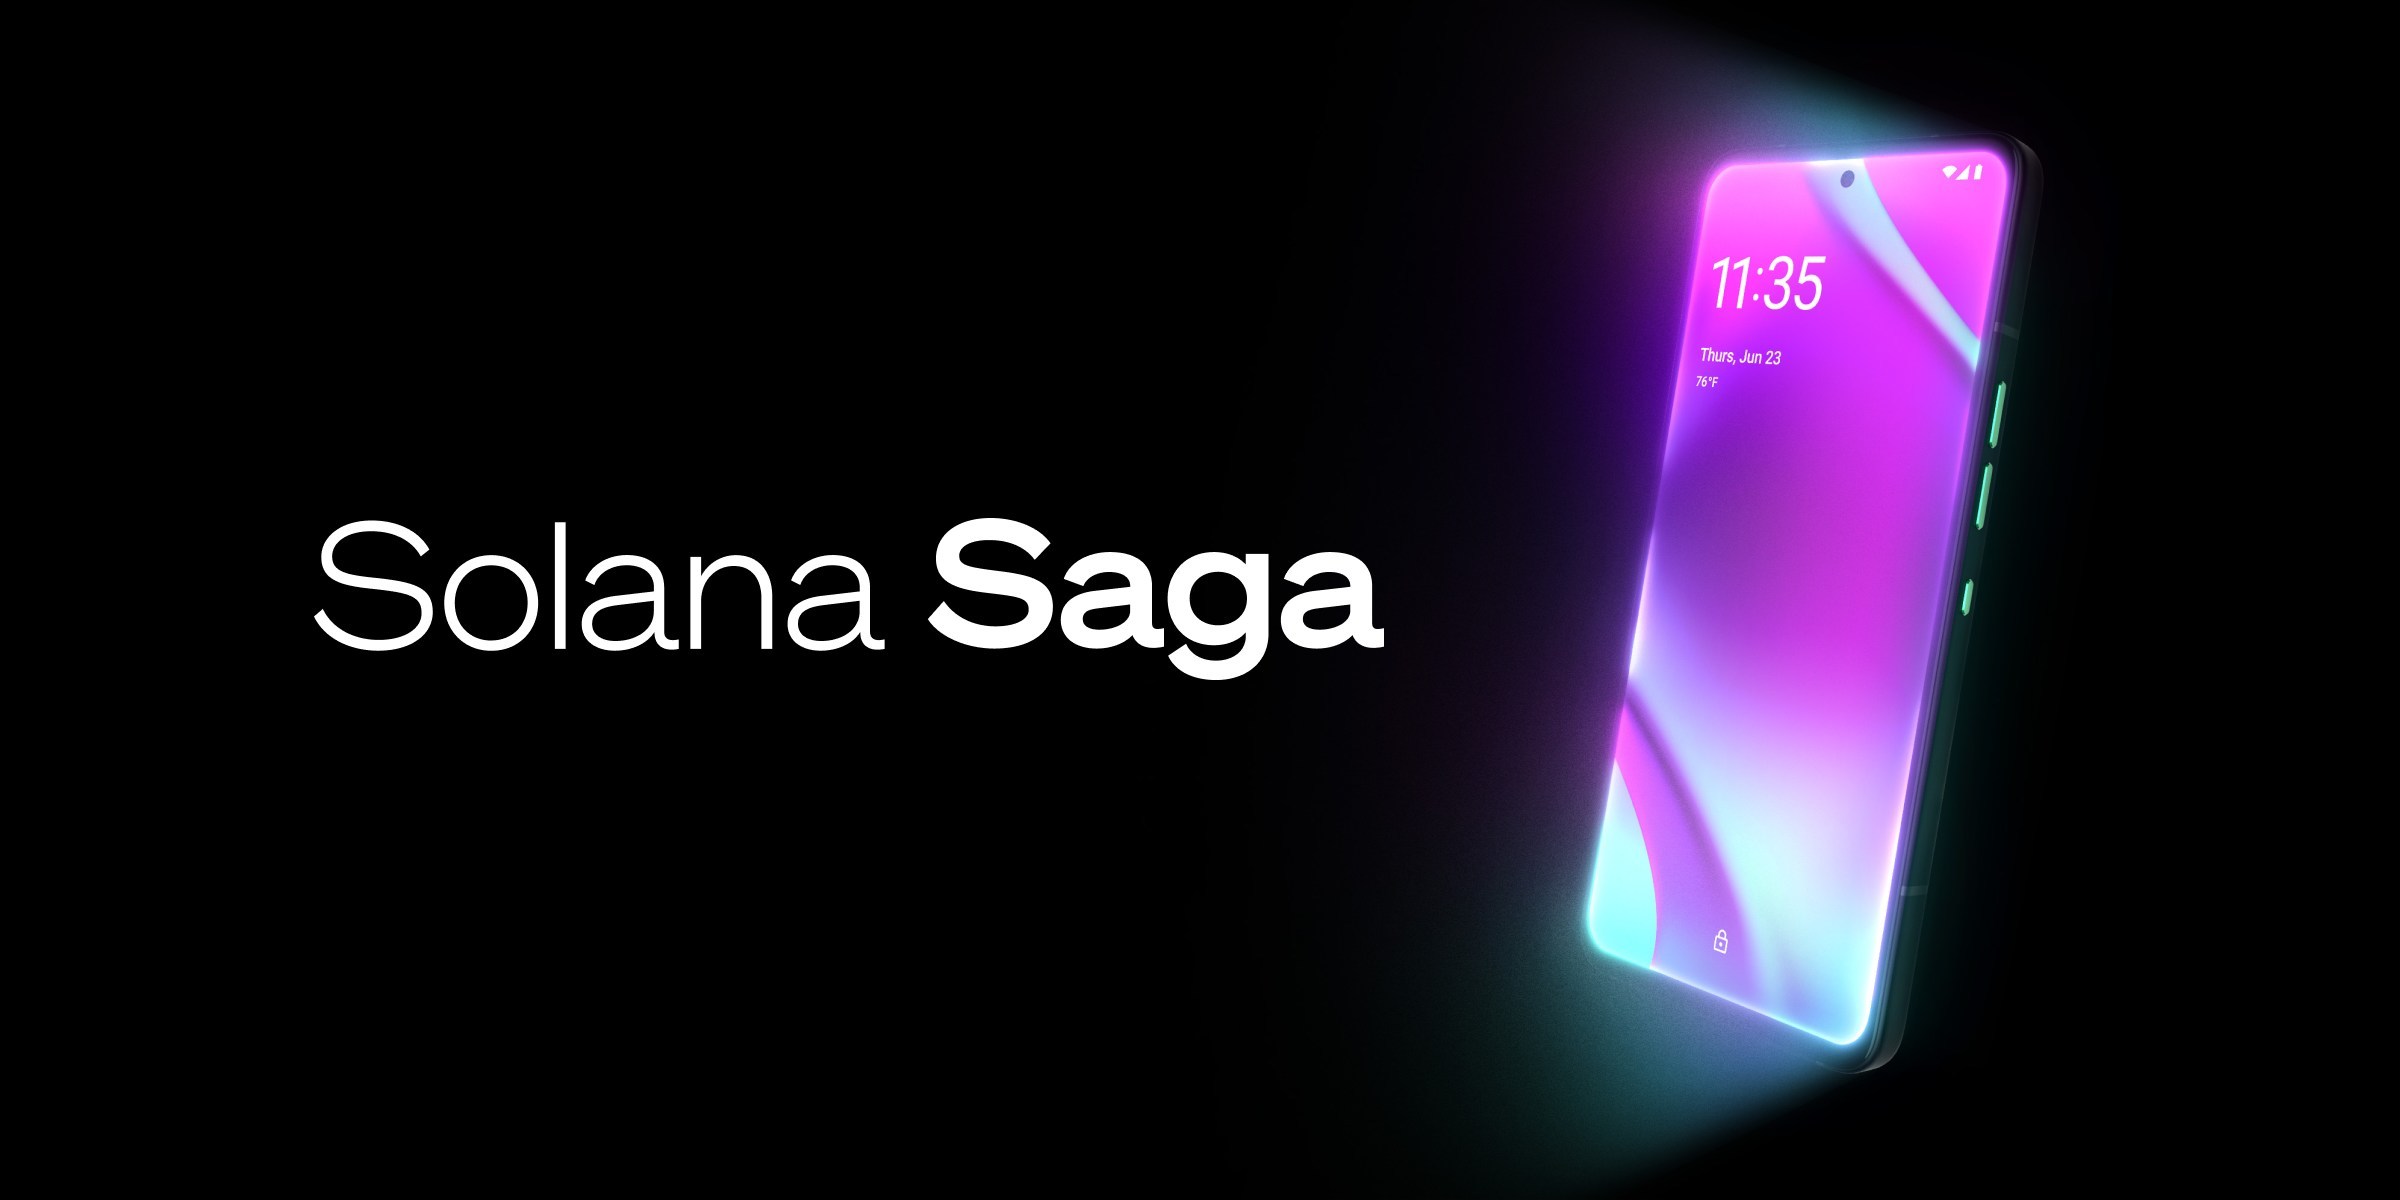 Solana saga light